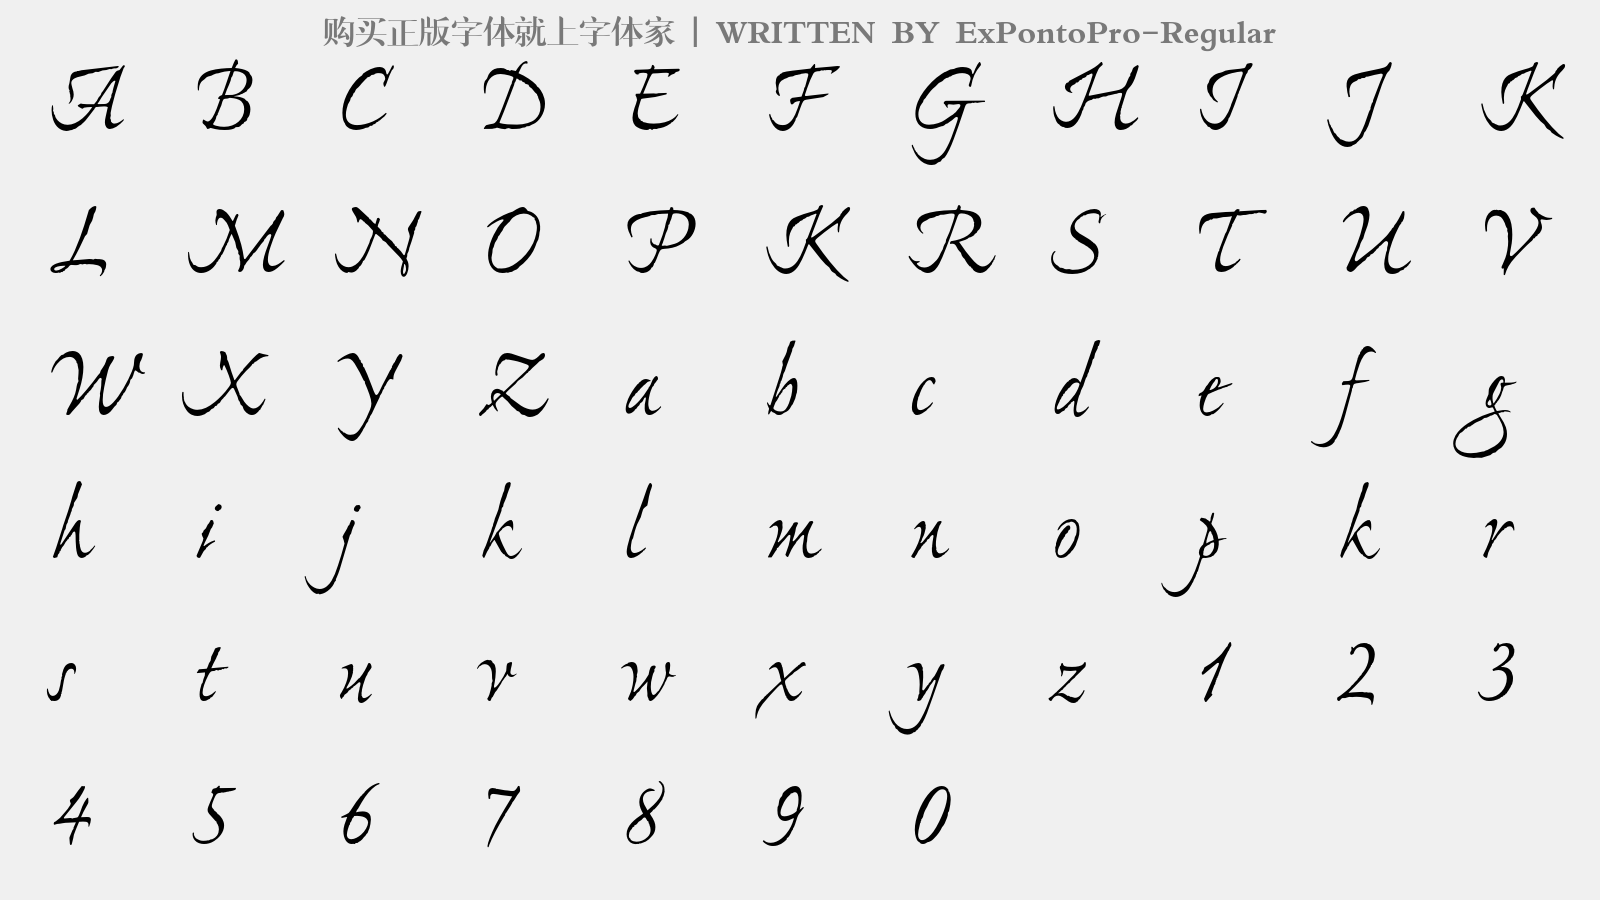 ExPontoPro-Regular - 大写字母/小写字母/数字